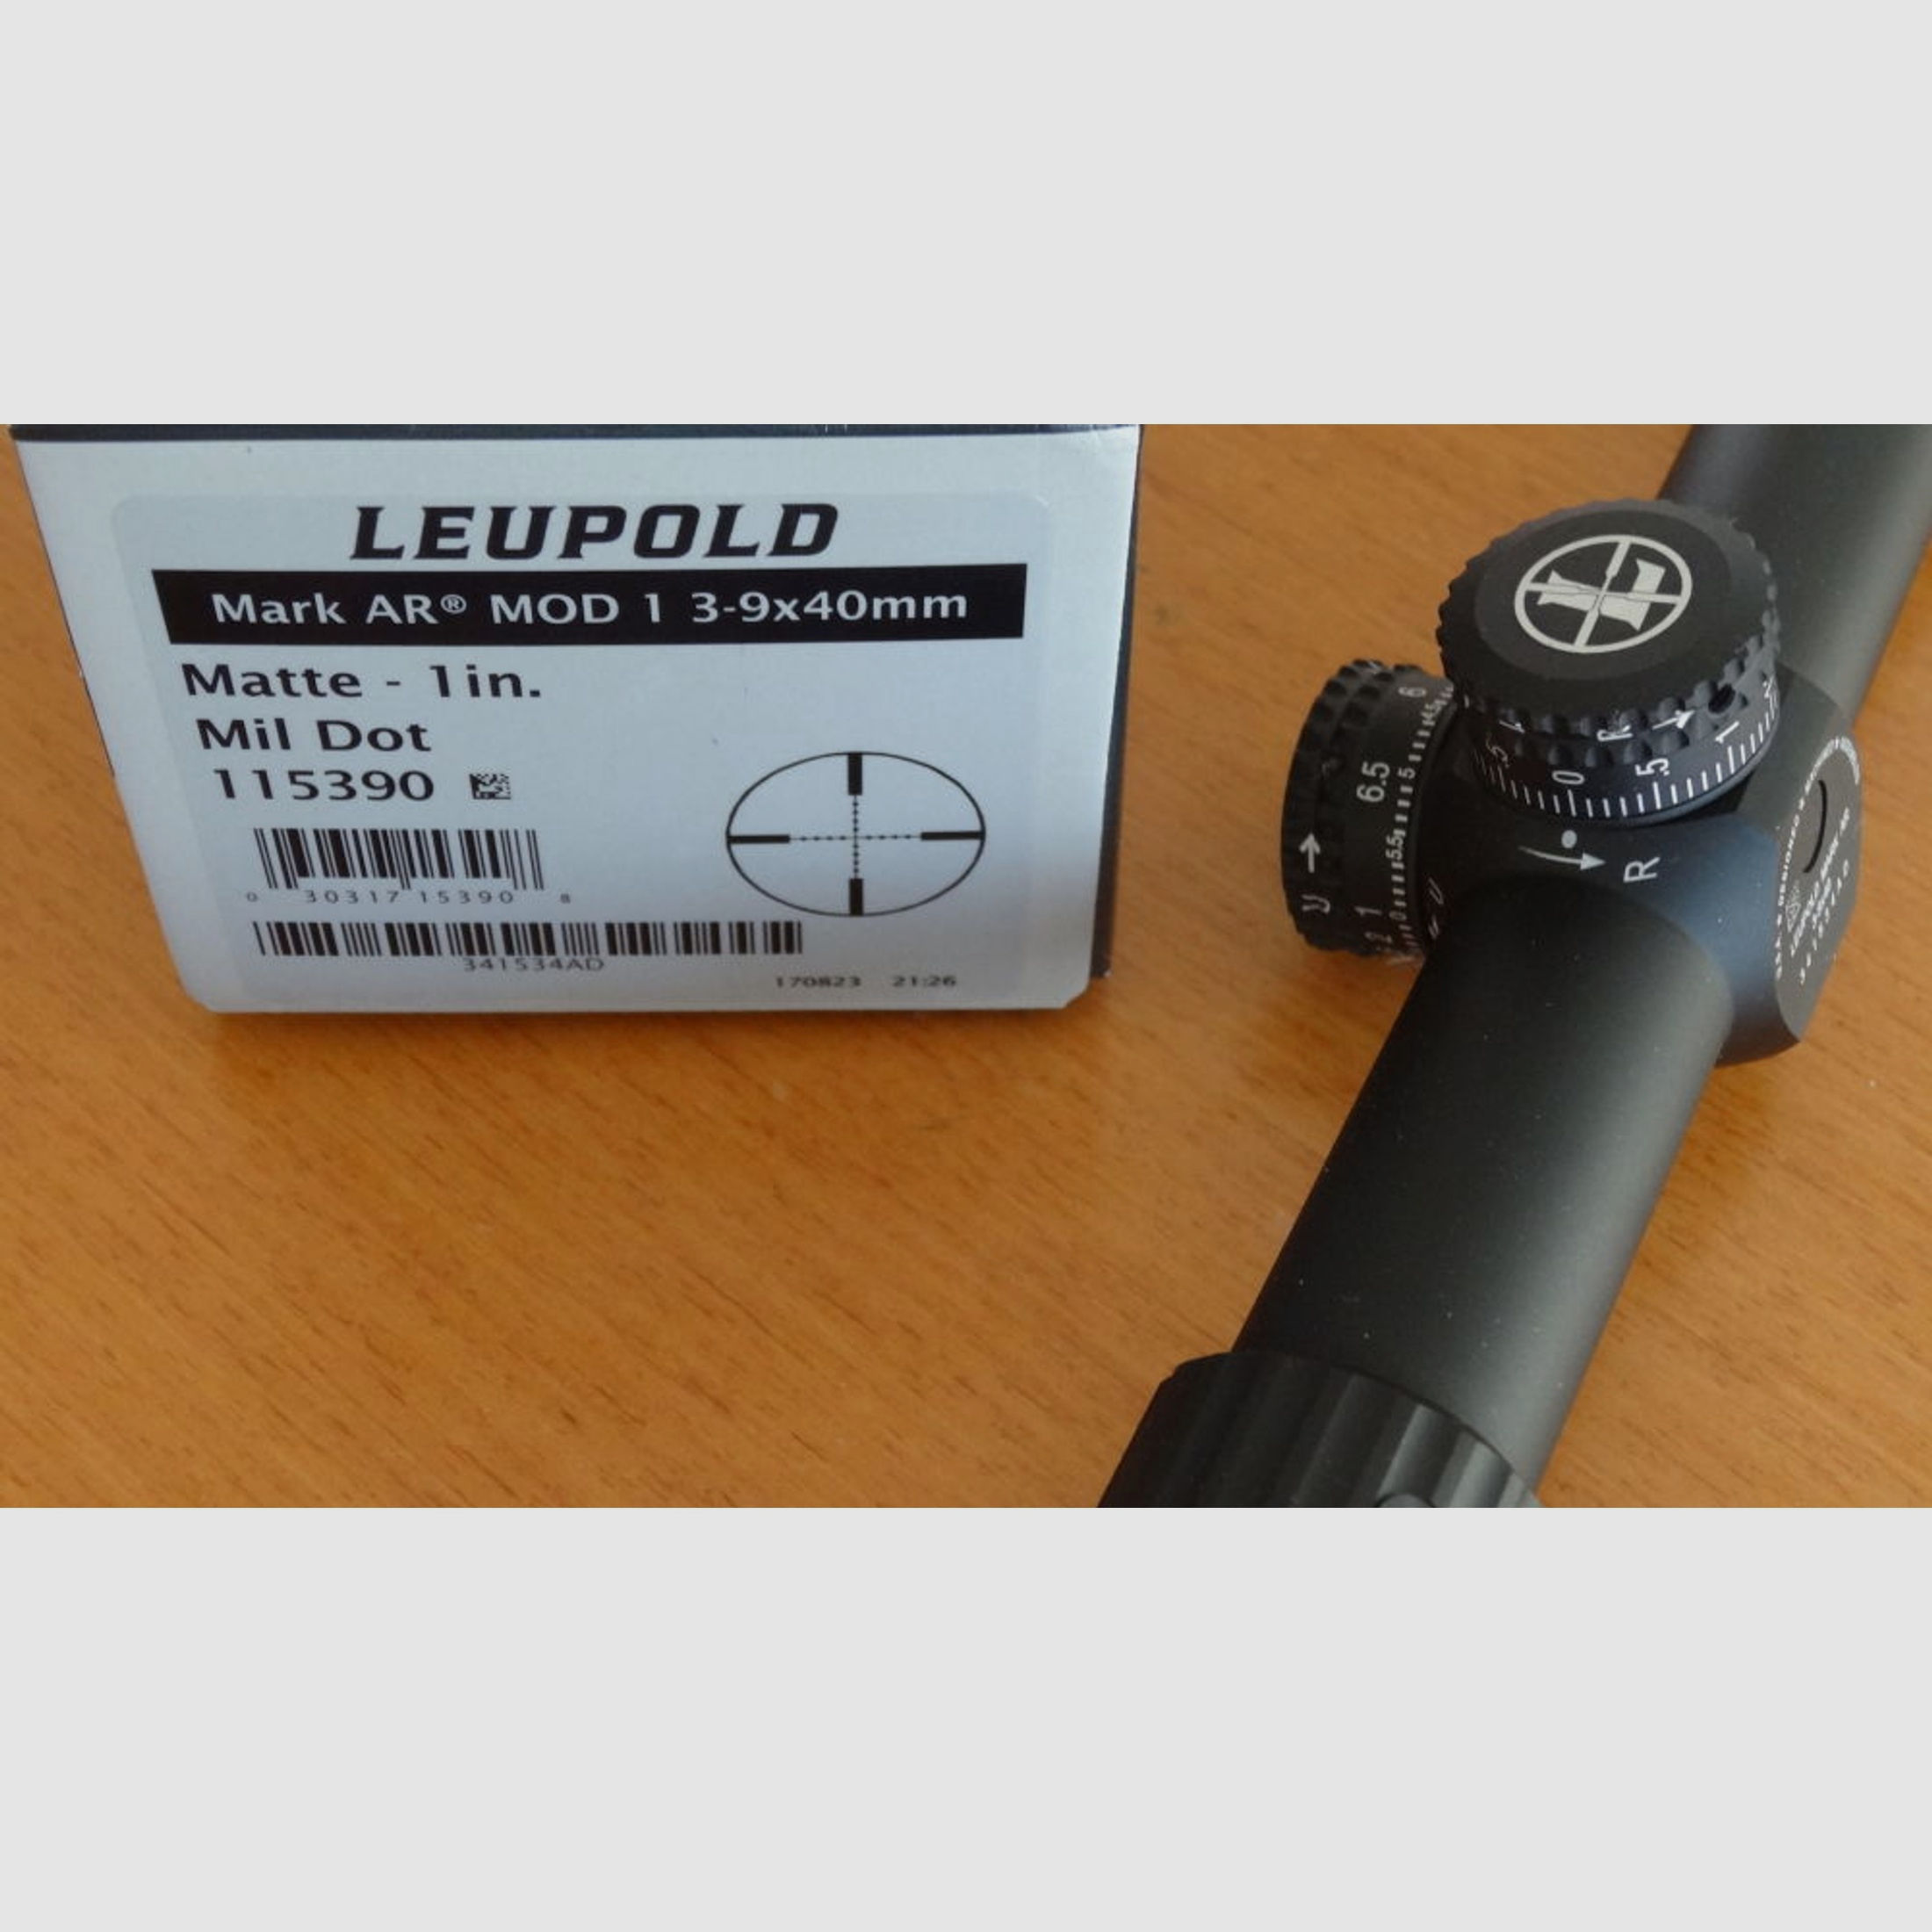 Leupold	 LEUPOLD ZIELFERNROHR MARK AR MOD 1 3-9X40MM ABS. Fire DOT